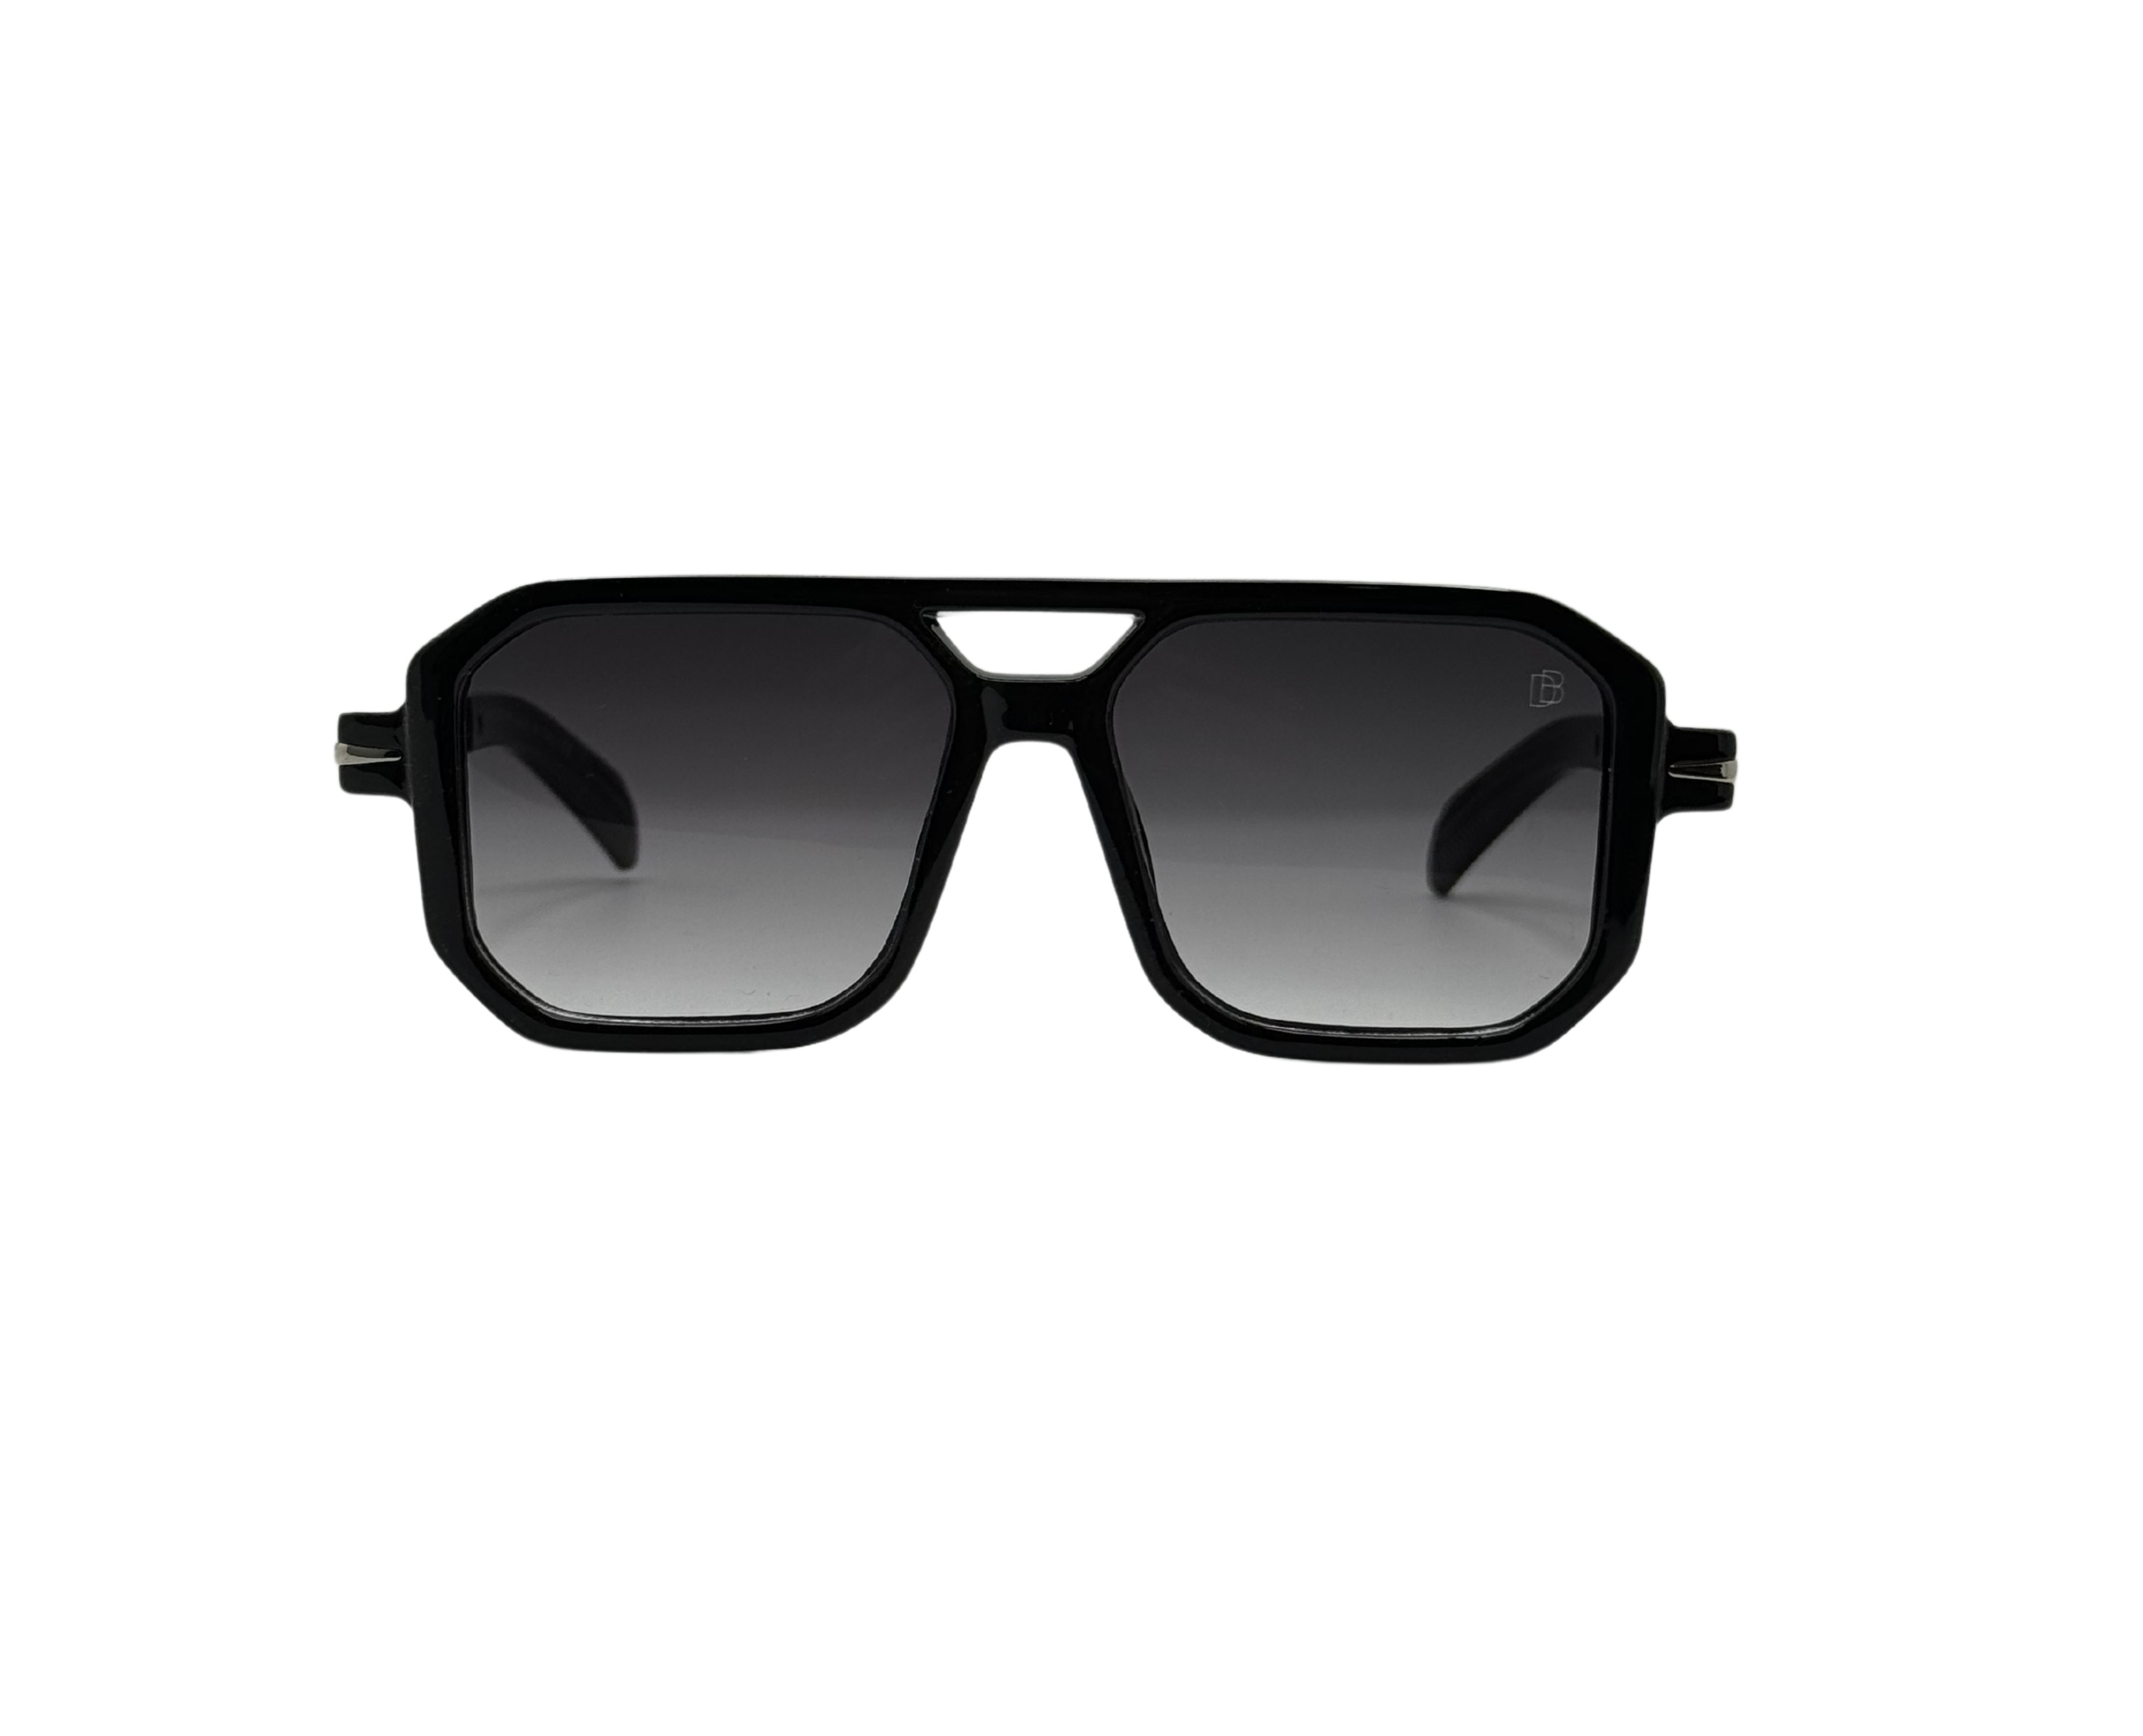 NS Deluxe - 7103 - Black - Sunglasses